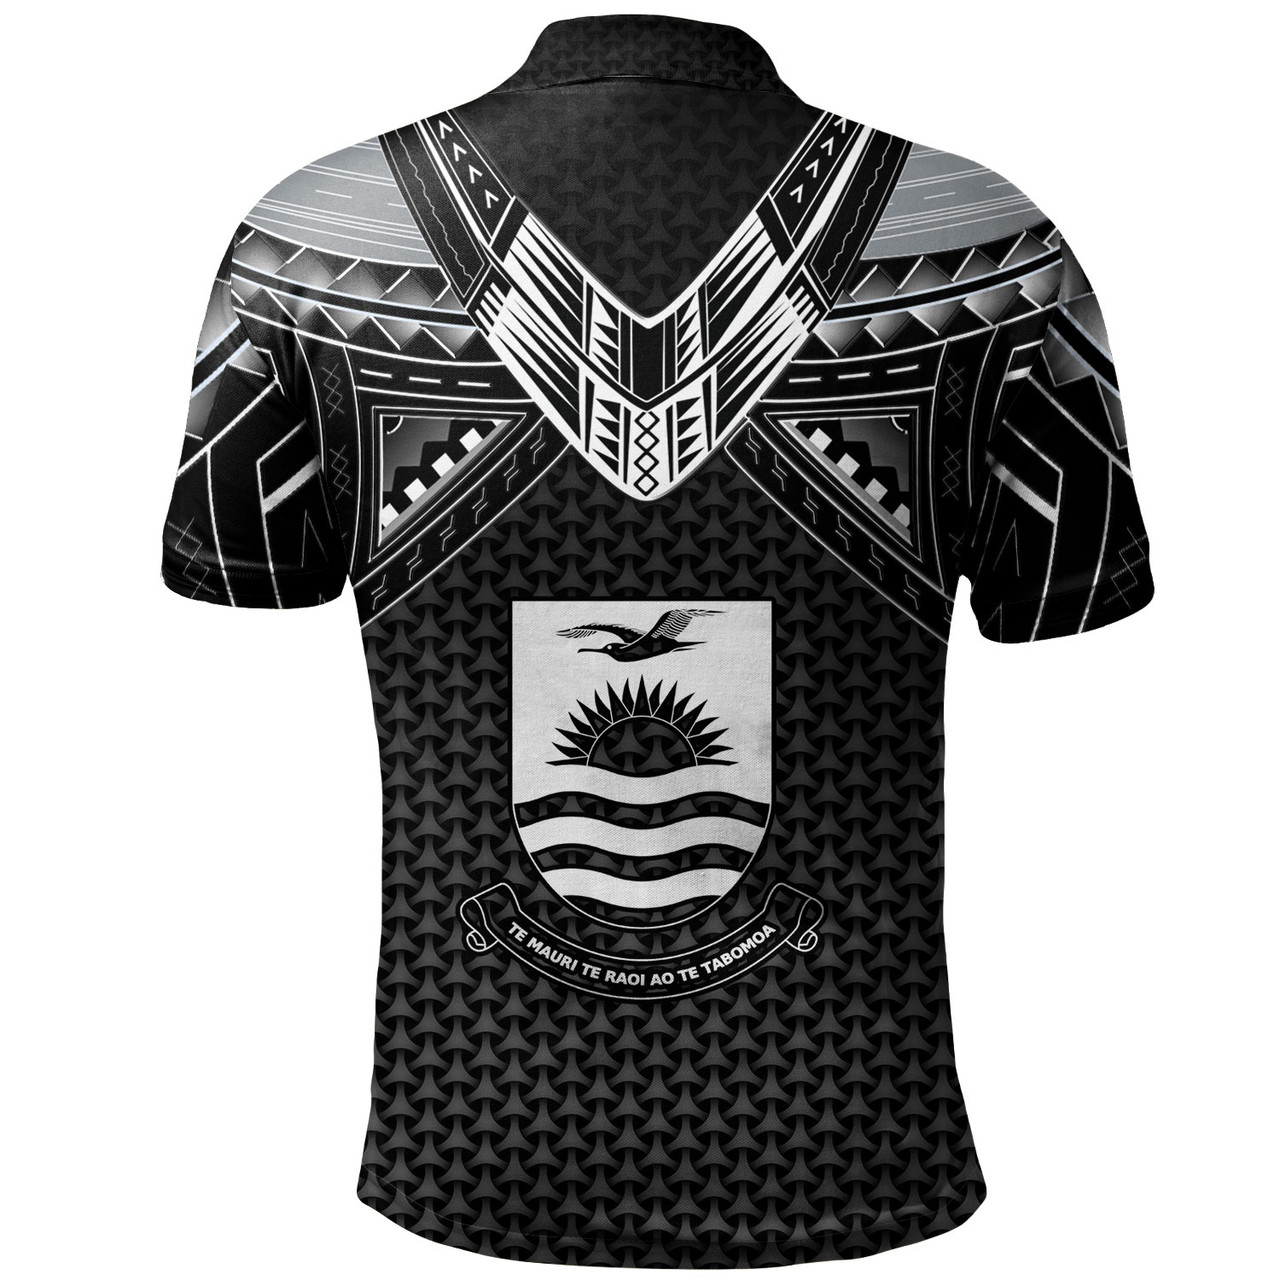 Kiribati Custom Personalised Polo Shirt Polynesian Tribal Tattoo